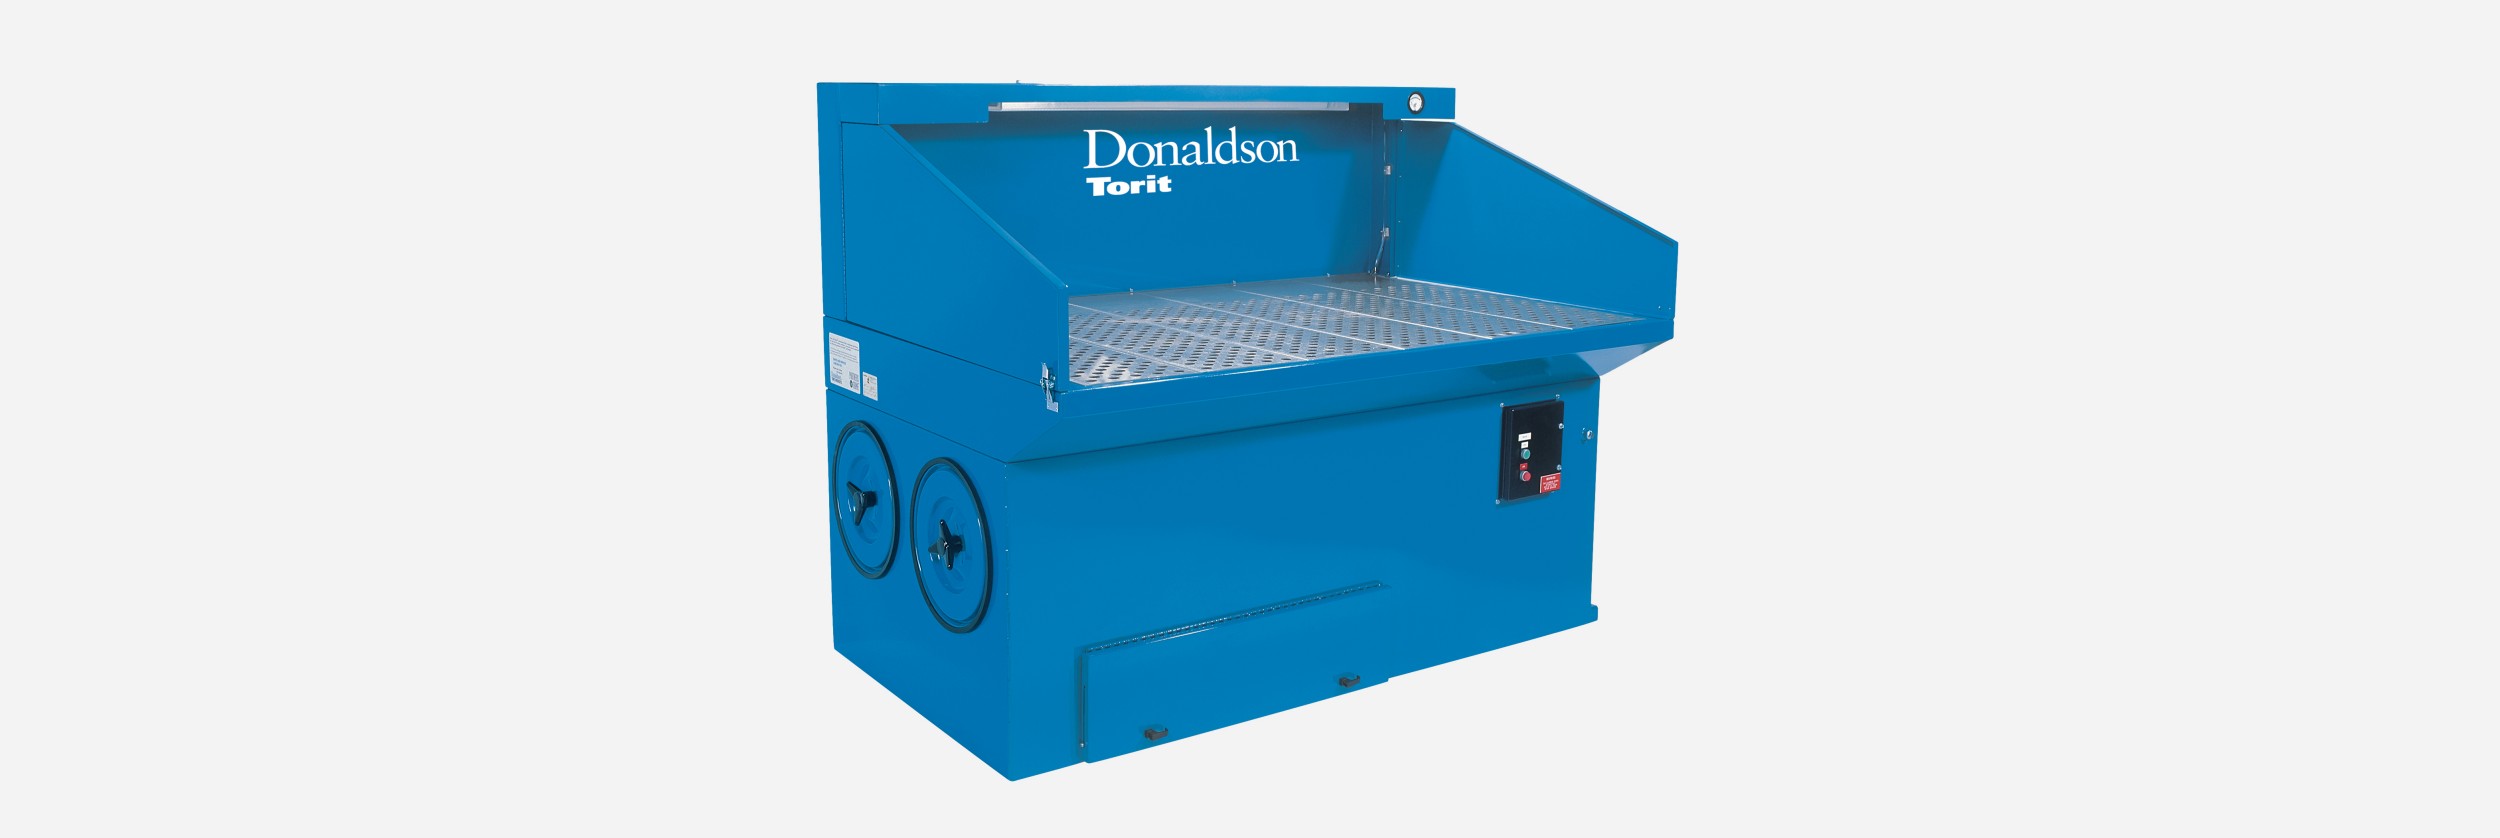 Donadlson Downdraft Table